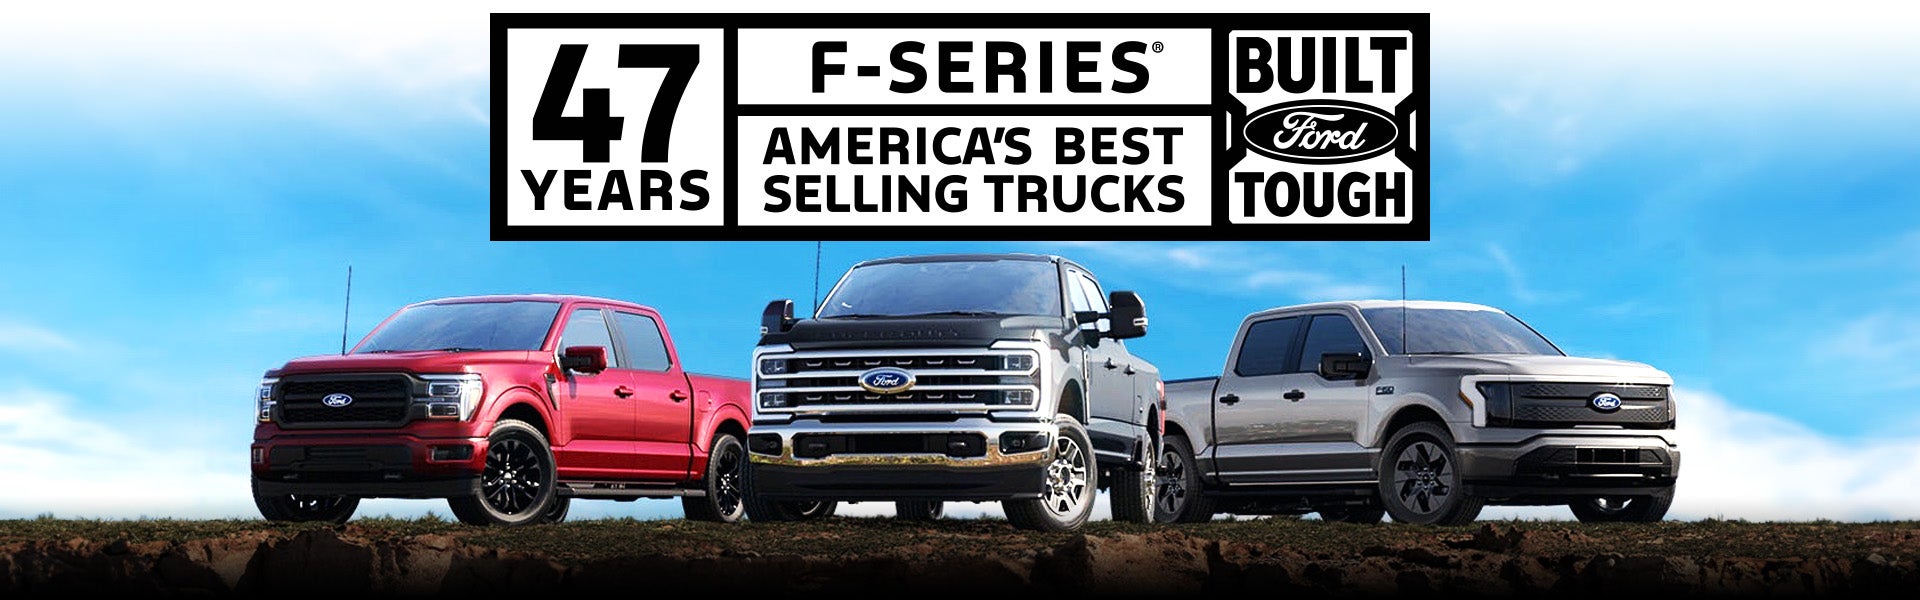 America's Best Selling Trucks 